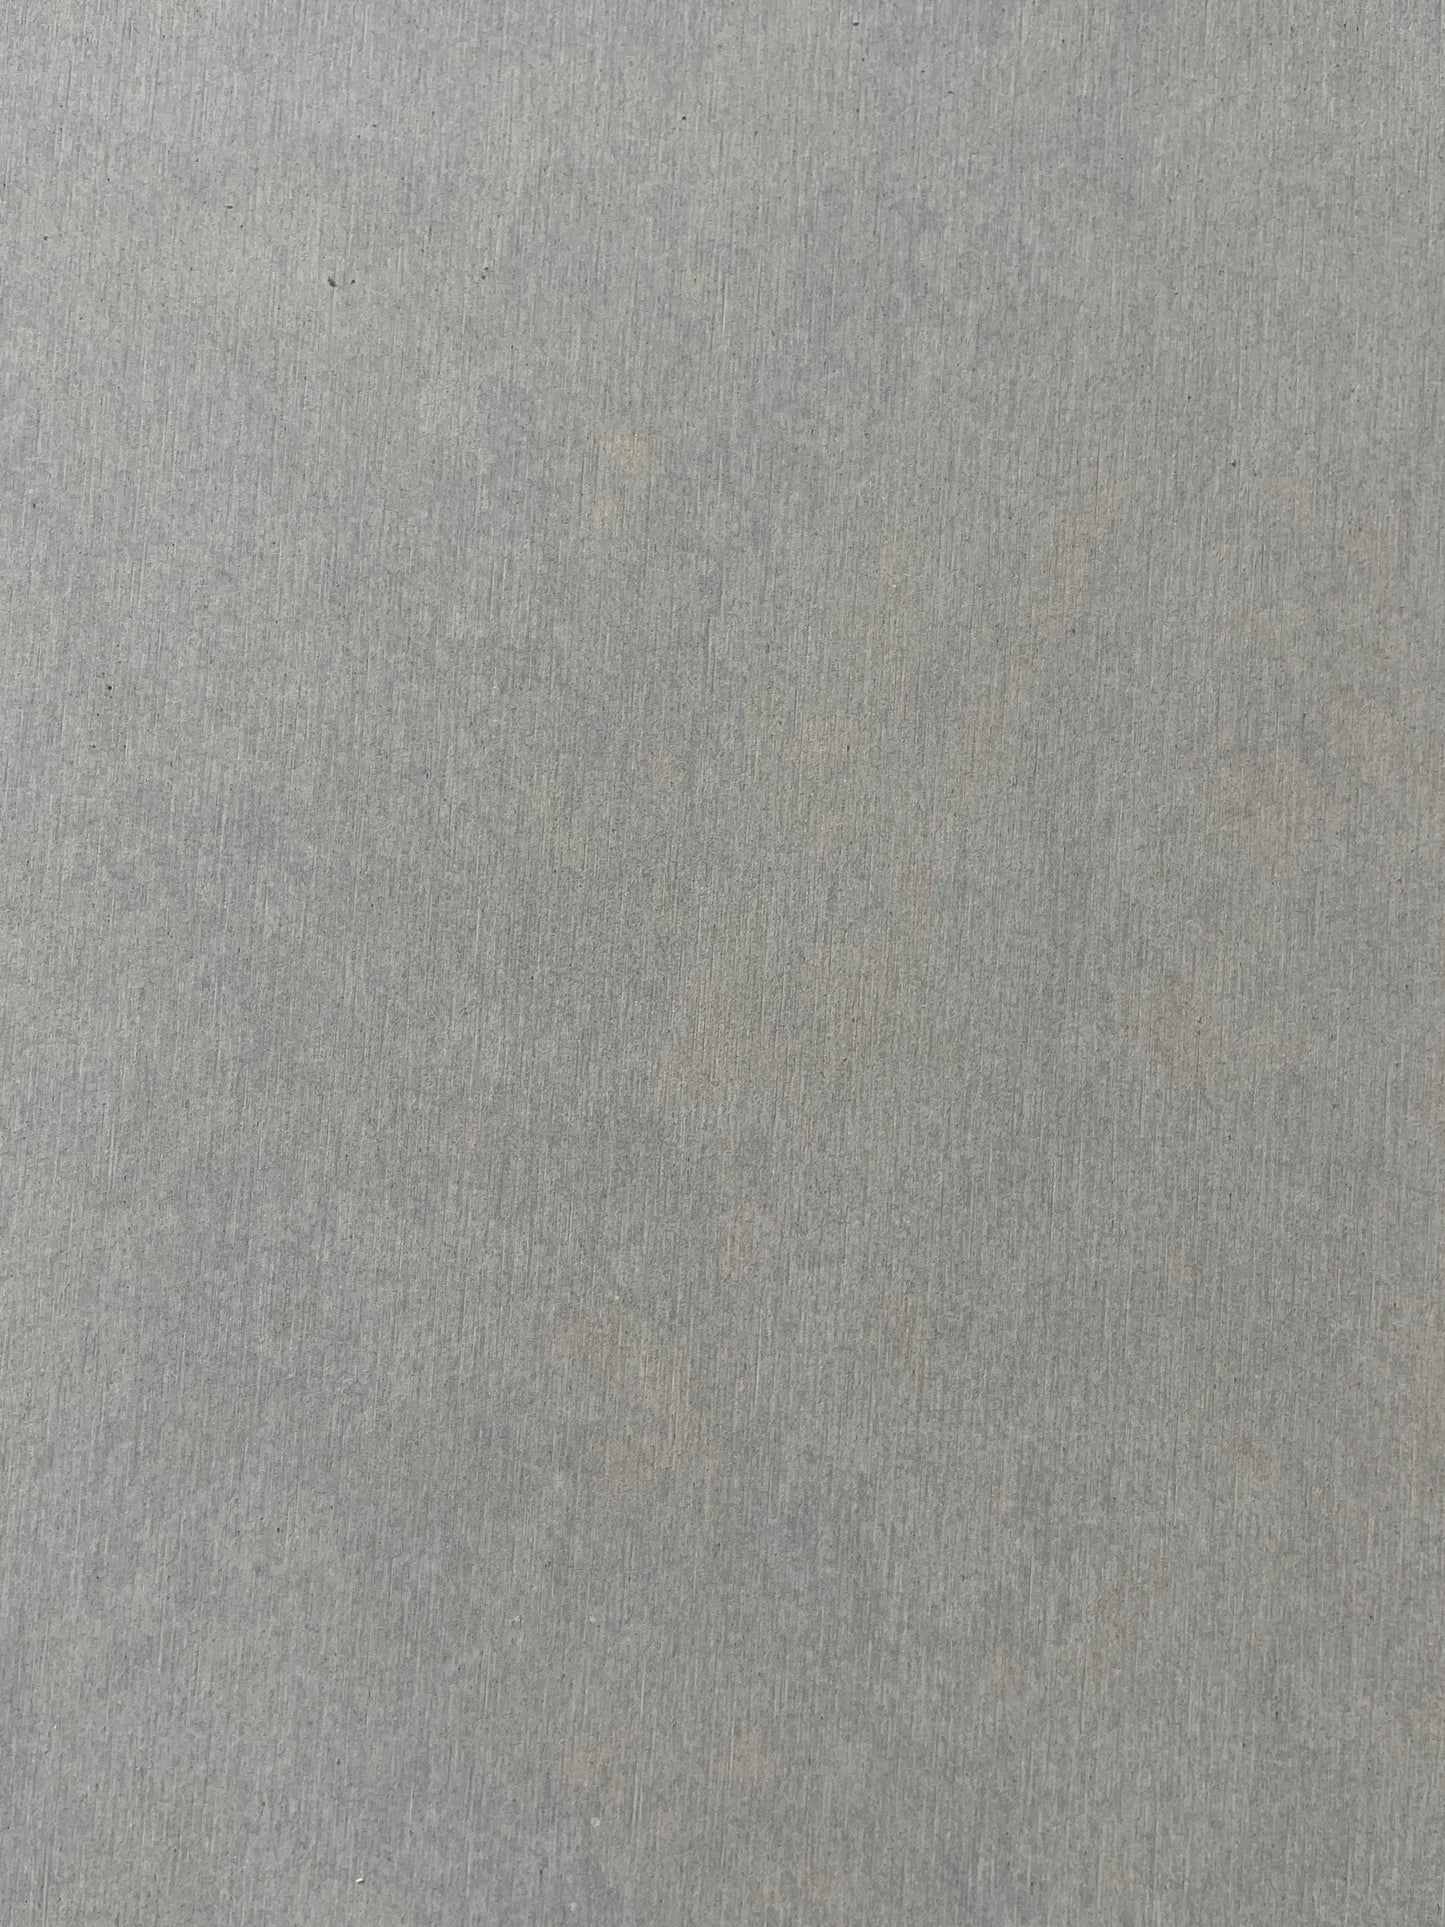 Equitone │ Fibre Cement Panels, 6.6